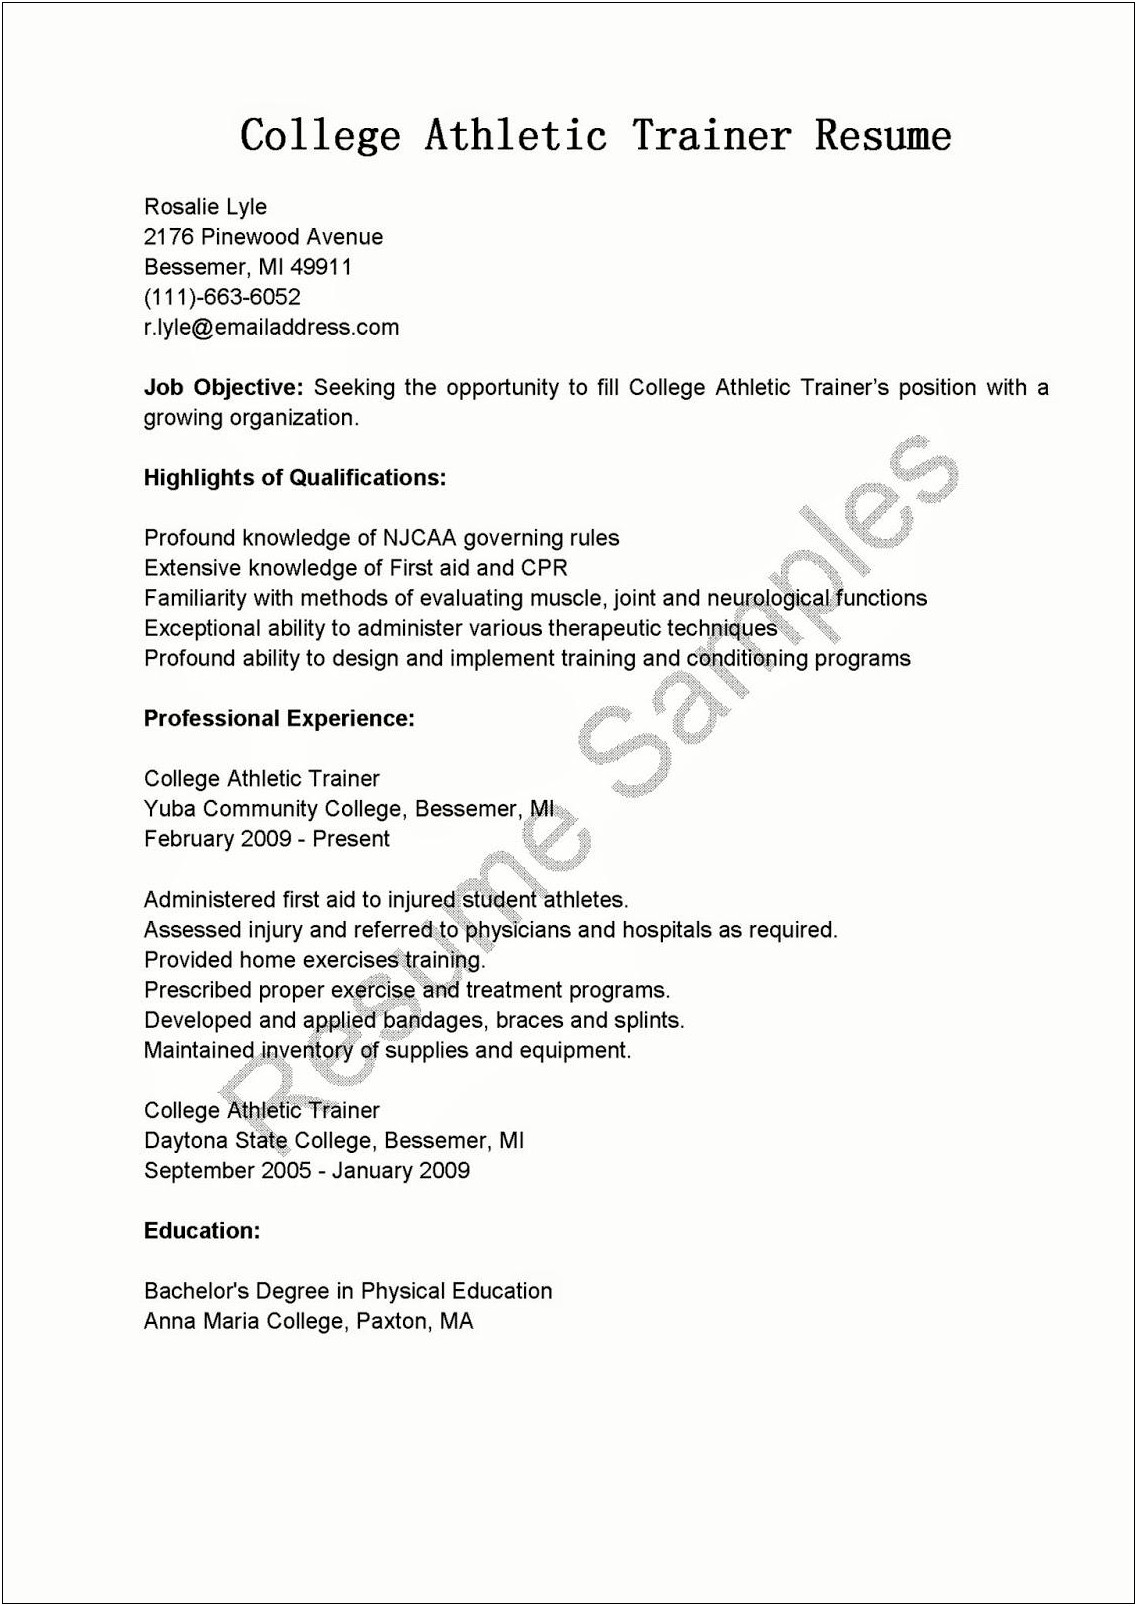 Resume Job Description Athletic Trainer